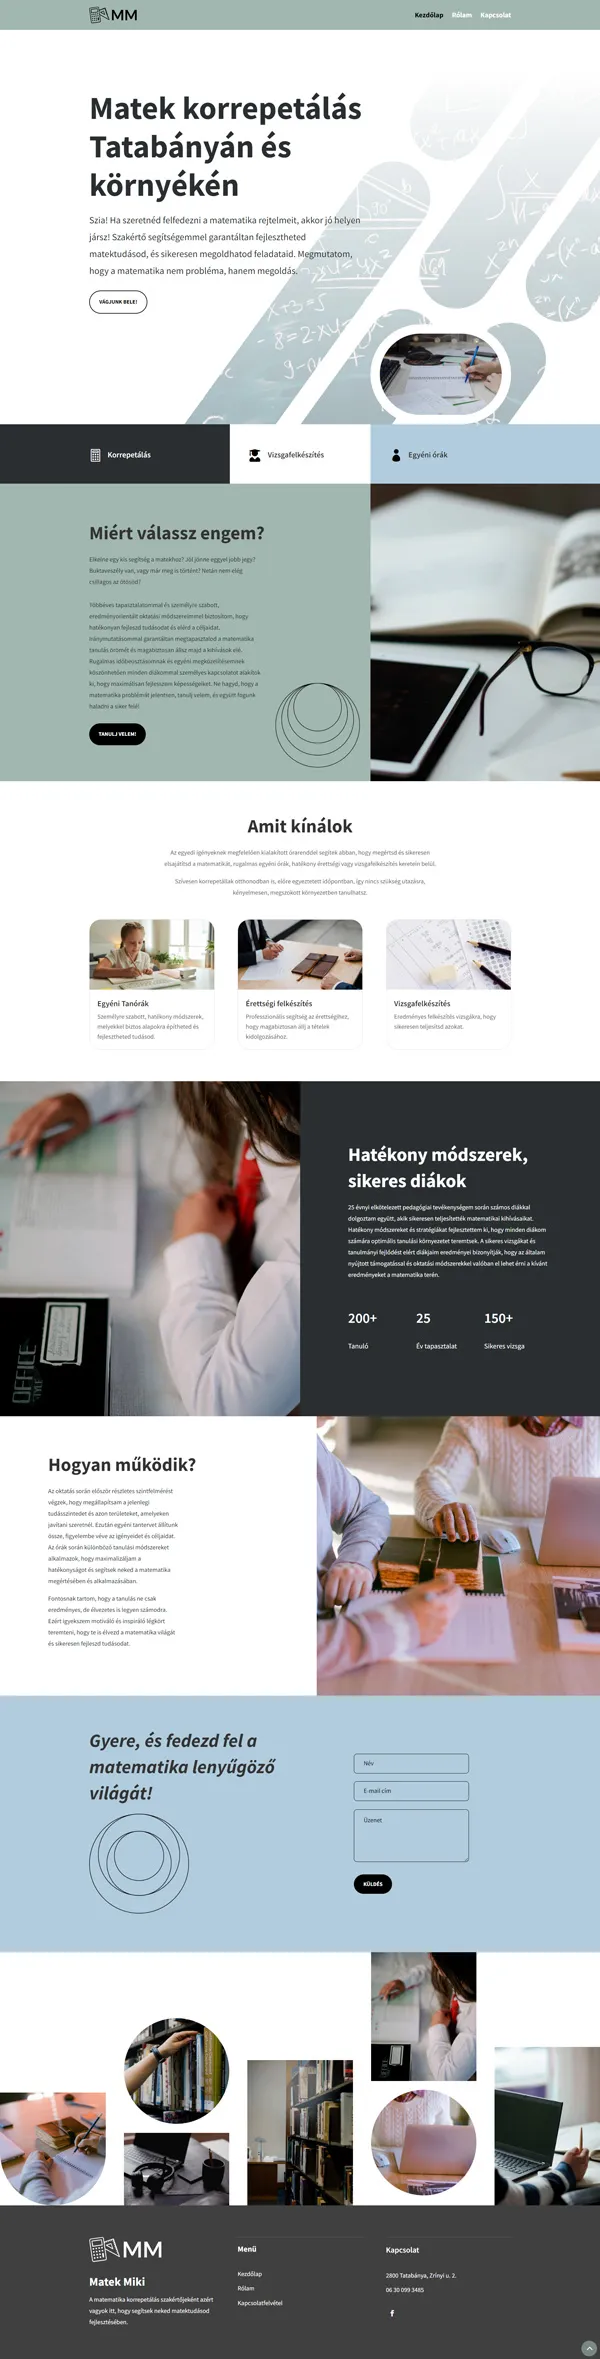 MatekMiki home page